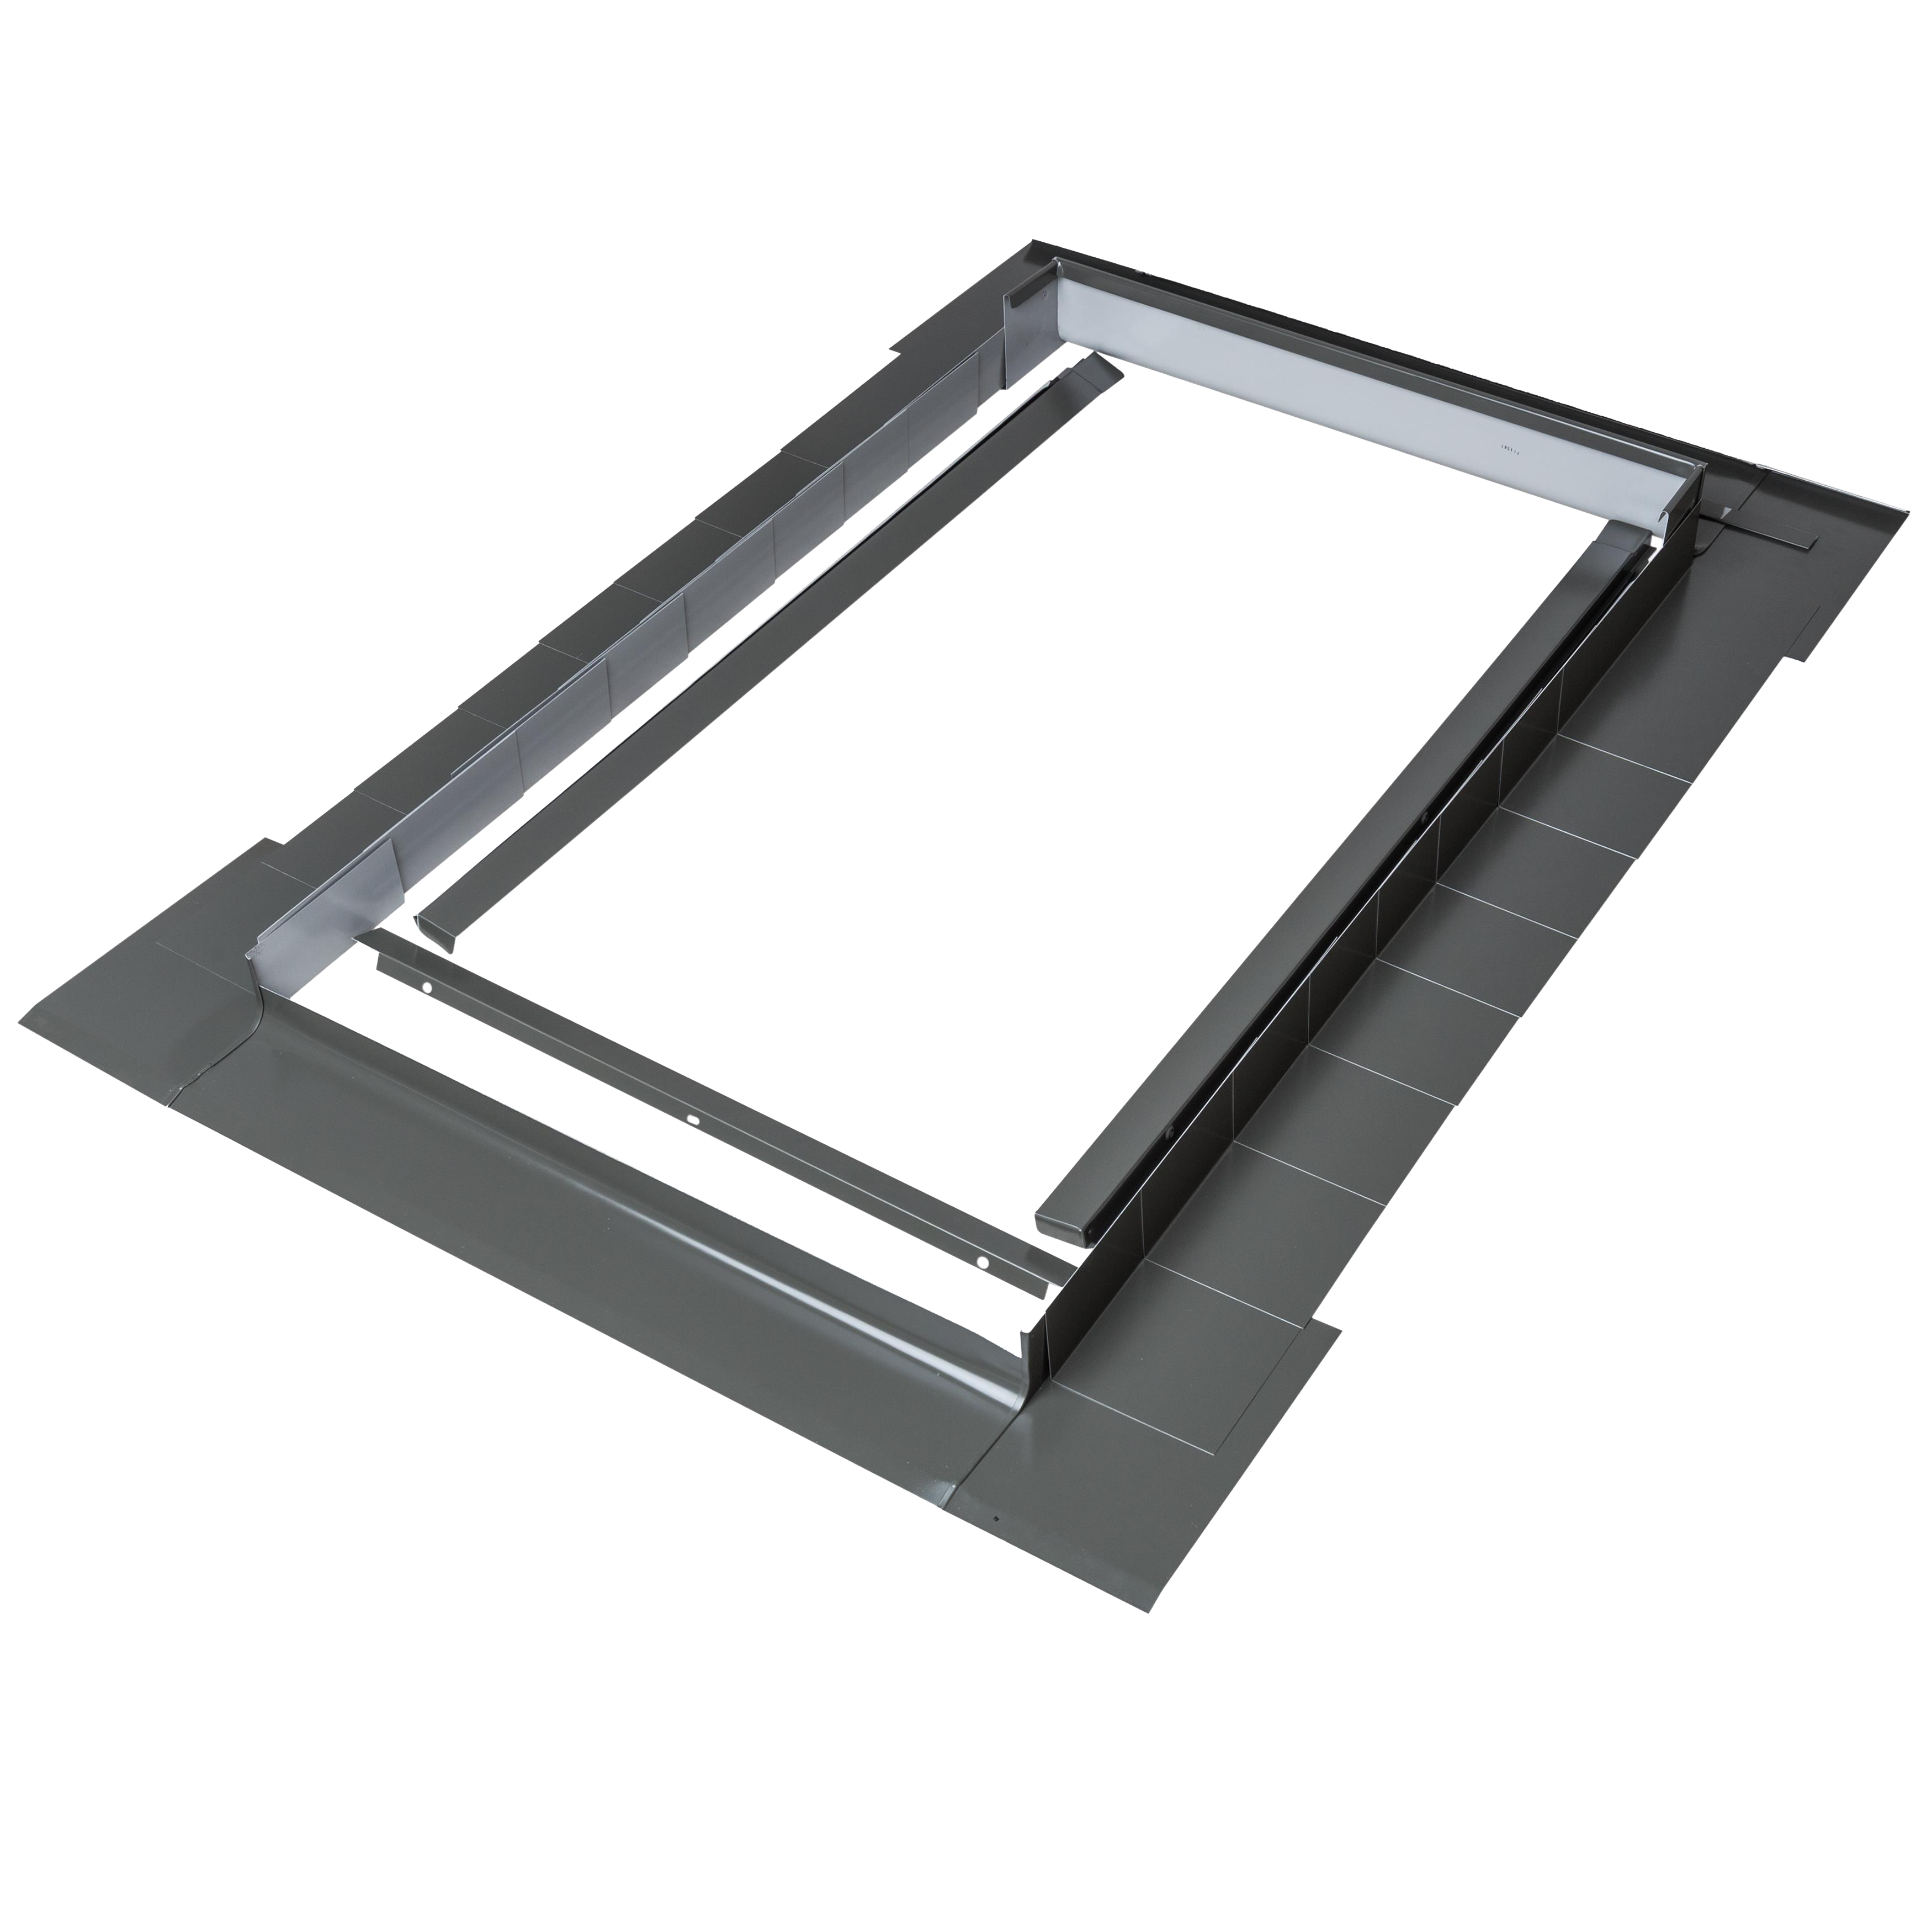 Tapajuntas ventana de tejado plano de aluminio fakro de 78 x 118 cm